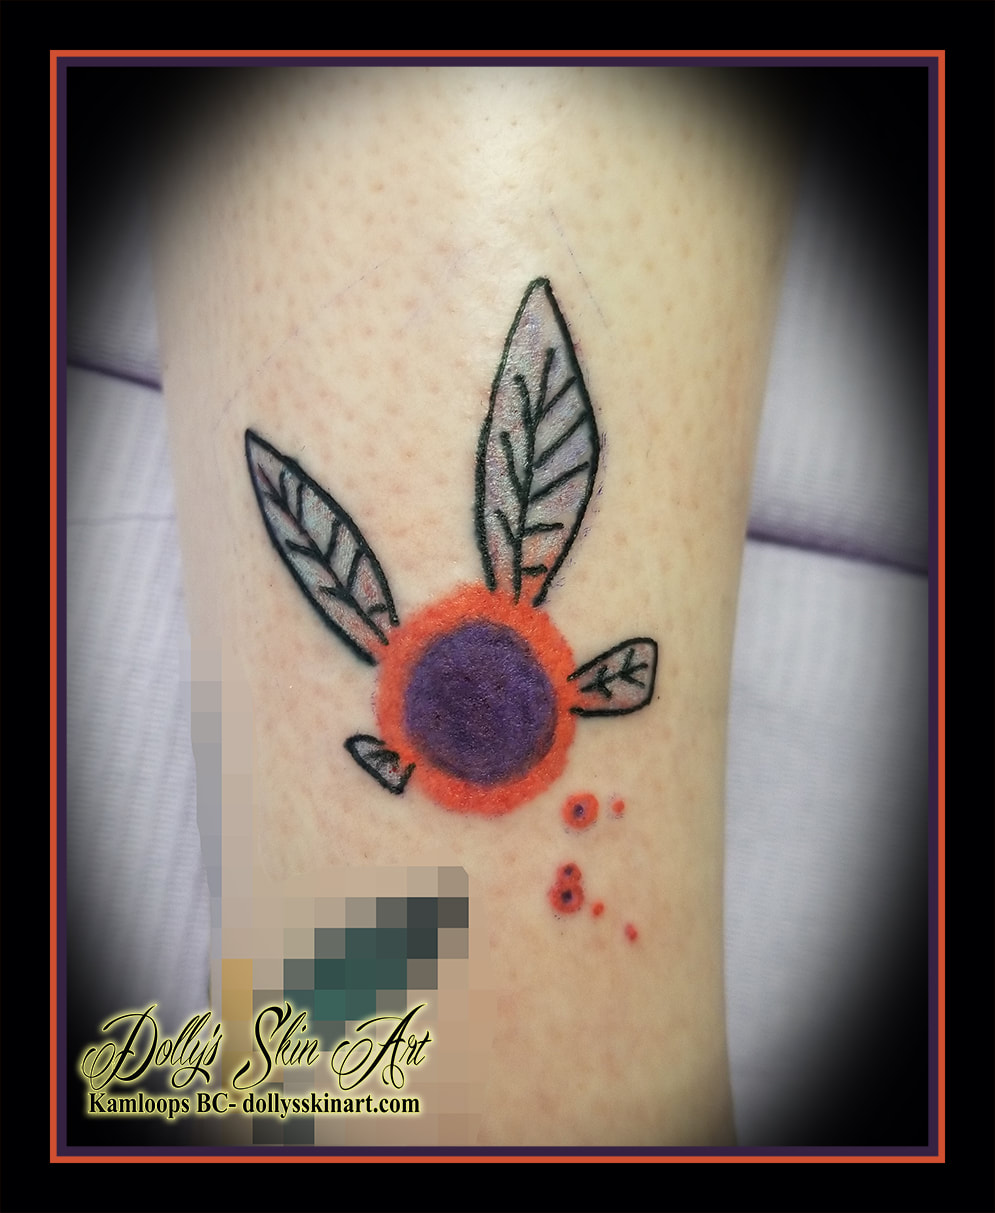 Tael tattoo fairy colour legend of zelda orange purple black leg tattoo kamloops dolly's skin art